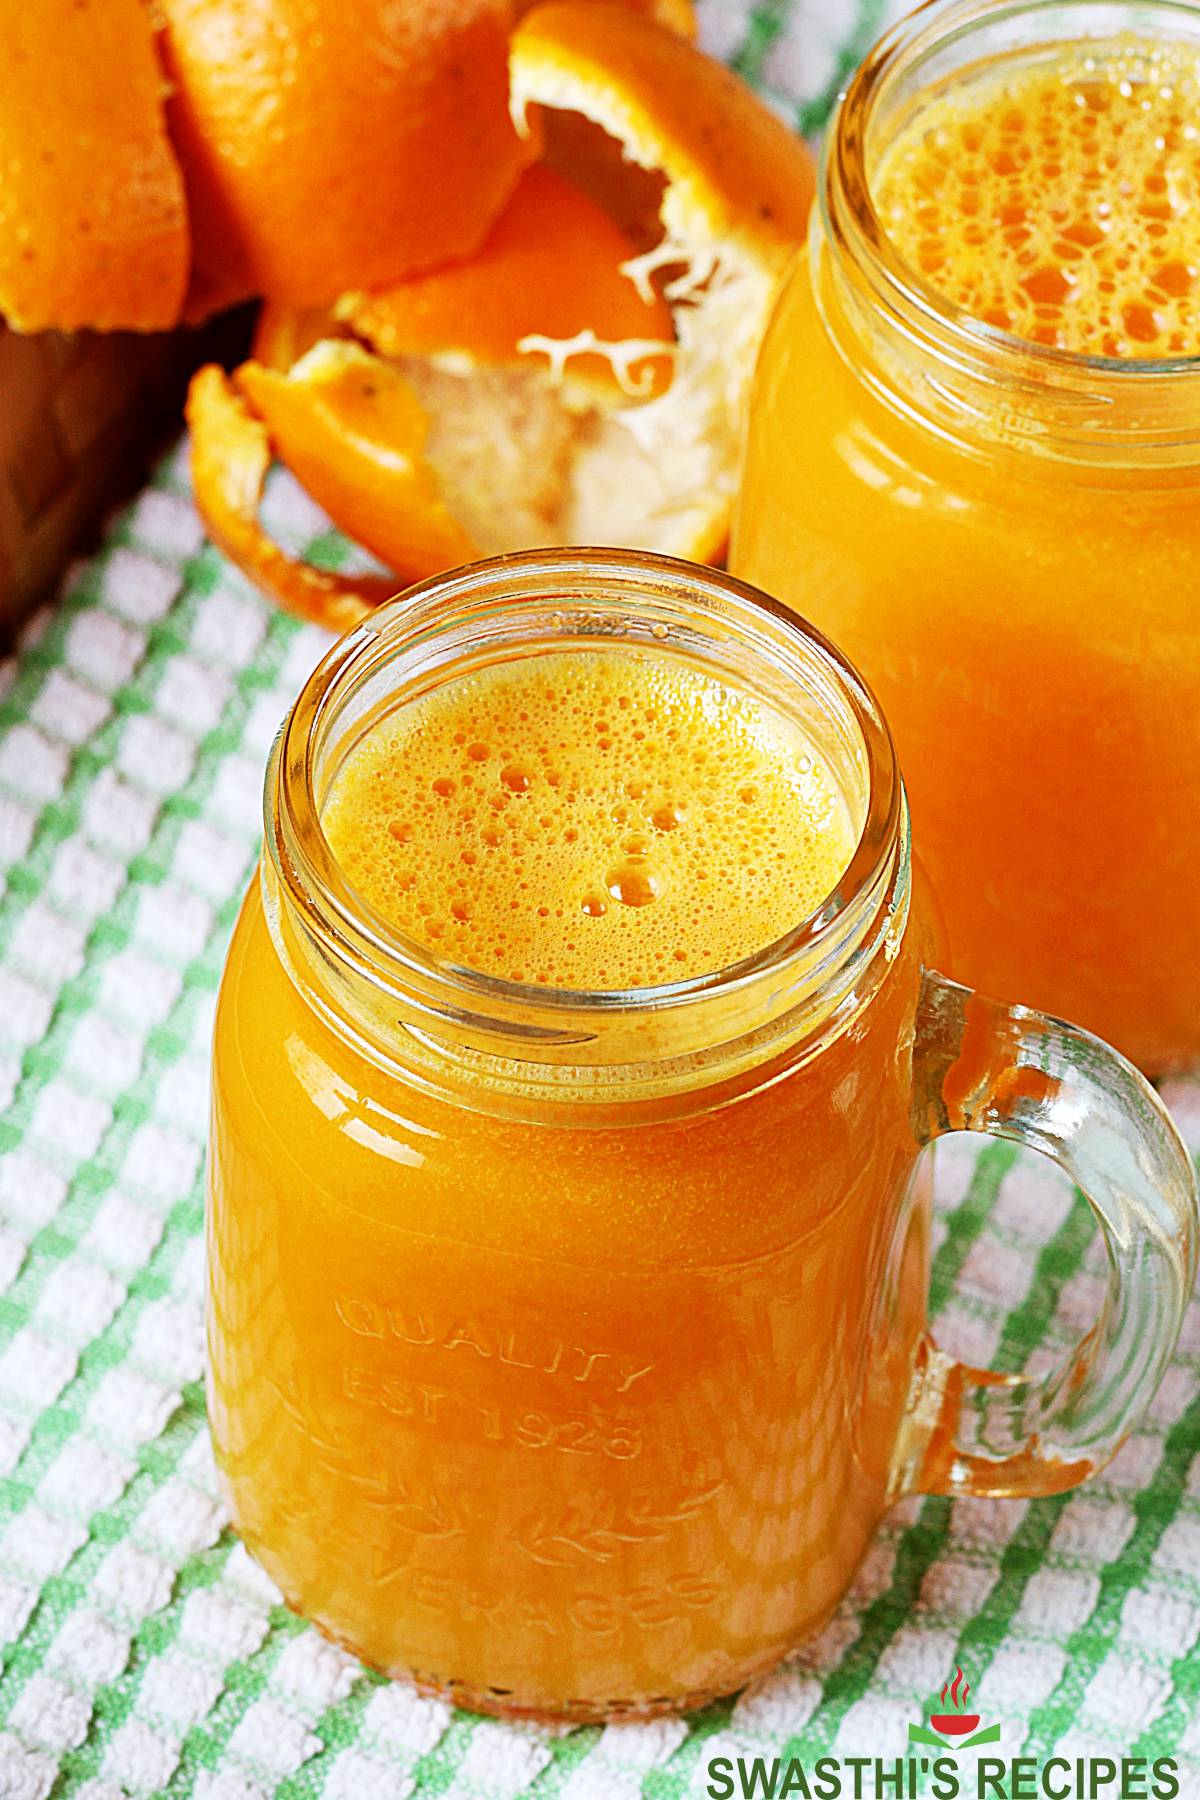 https://www.indianhealthyrecipes.com/wp-content/uploads/2021/06/orange-juice.jpg